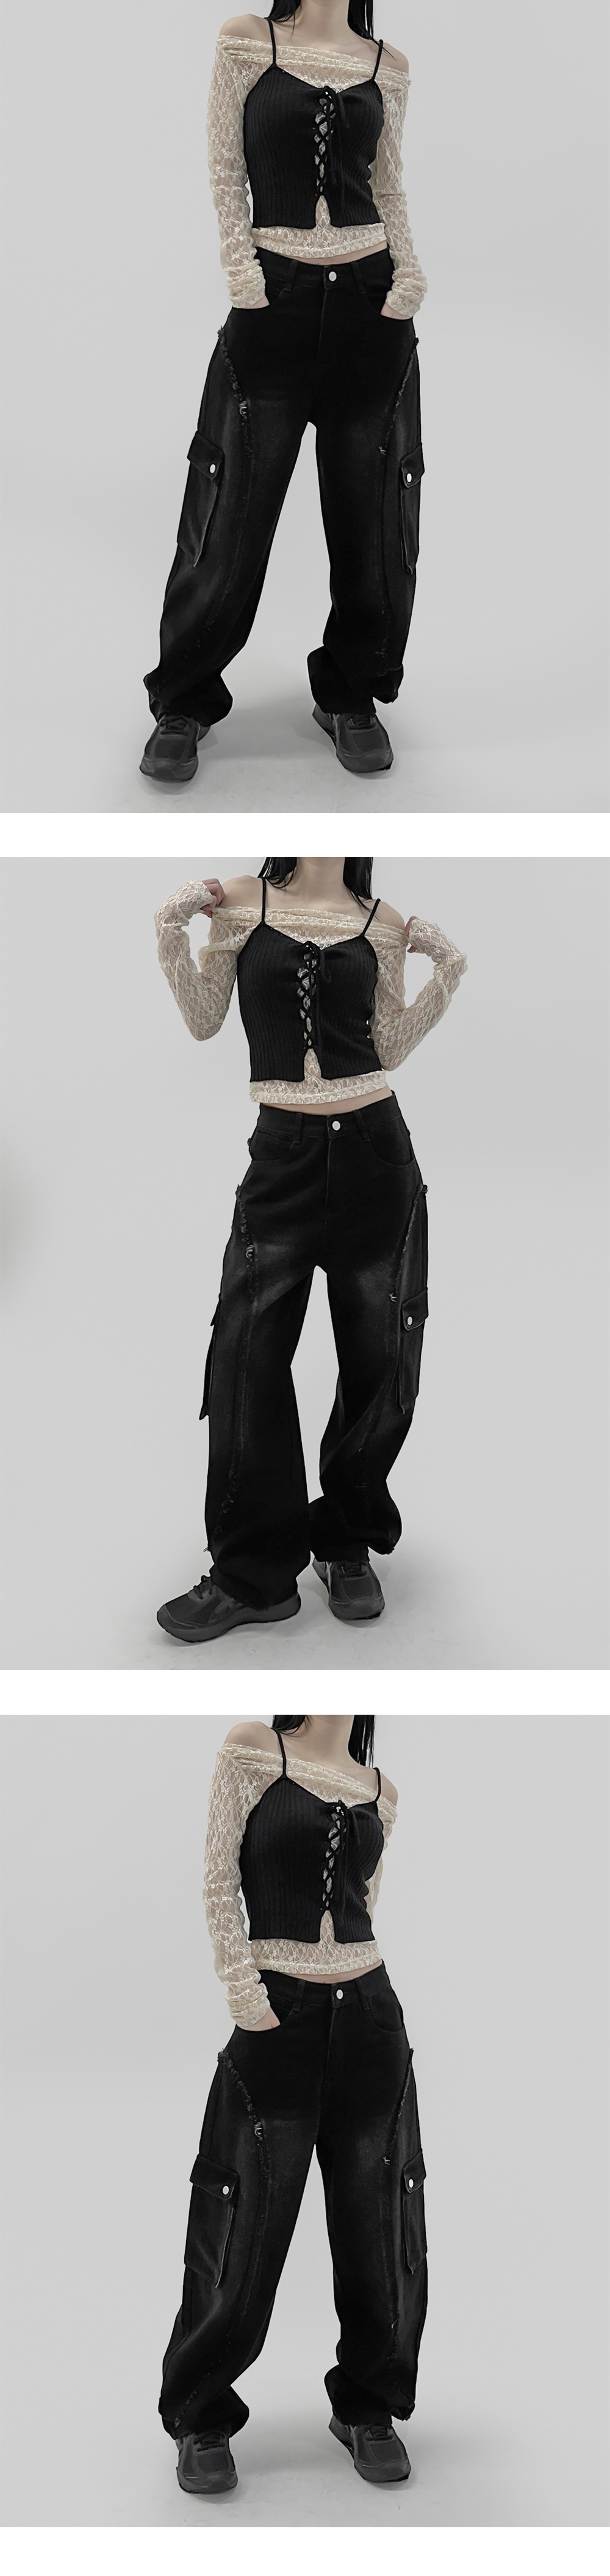 suspenders skirt/pants charcoal color image-S1L14